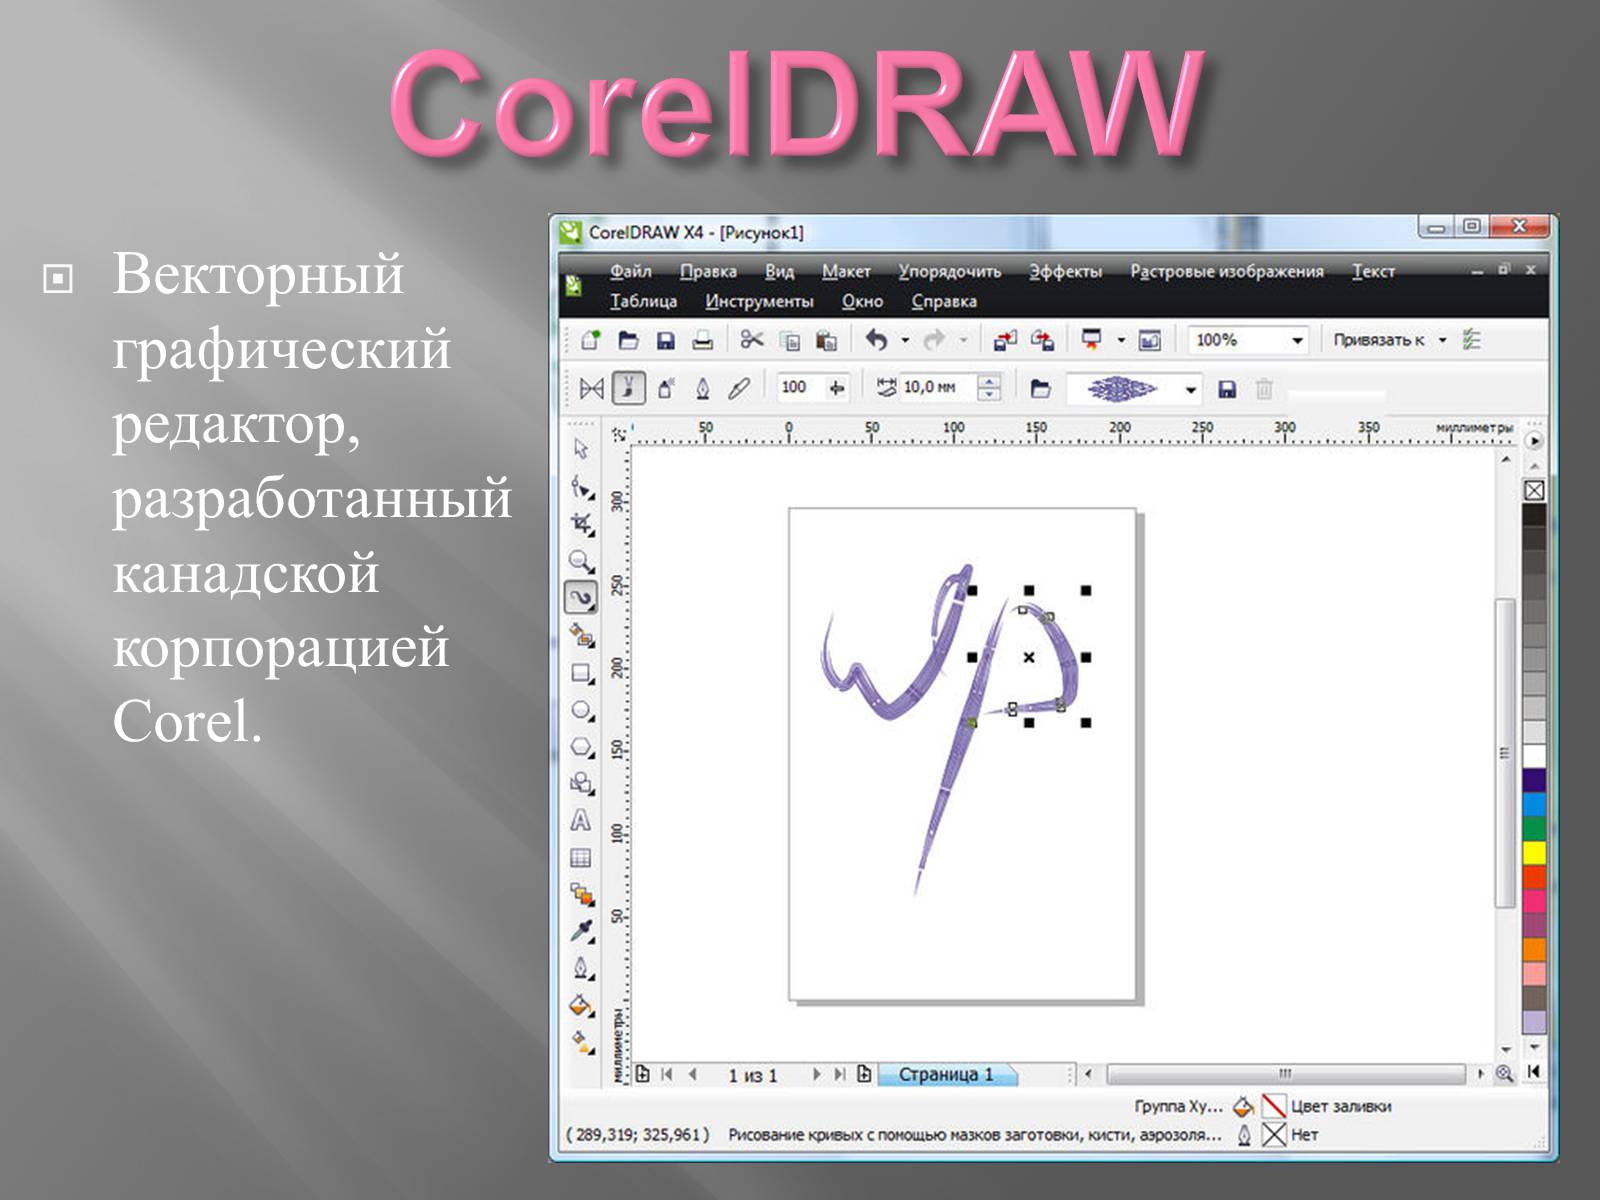 Coreldraw векторы. Графические редакторы векторной графики. Гибридные графические редакторы. Презентация на тему графические редакторы. Векторные графические редакторы презентация.